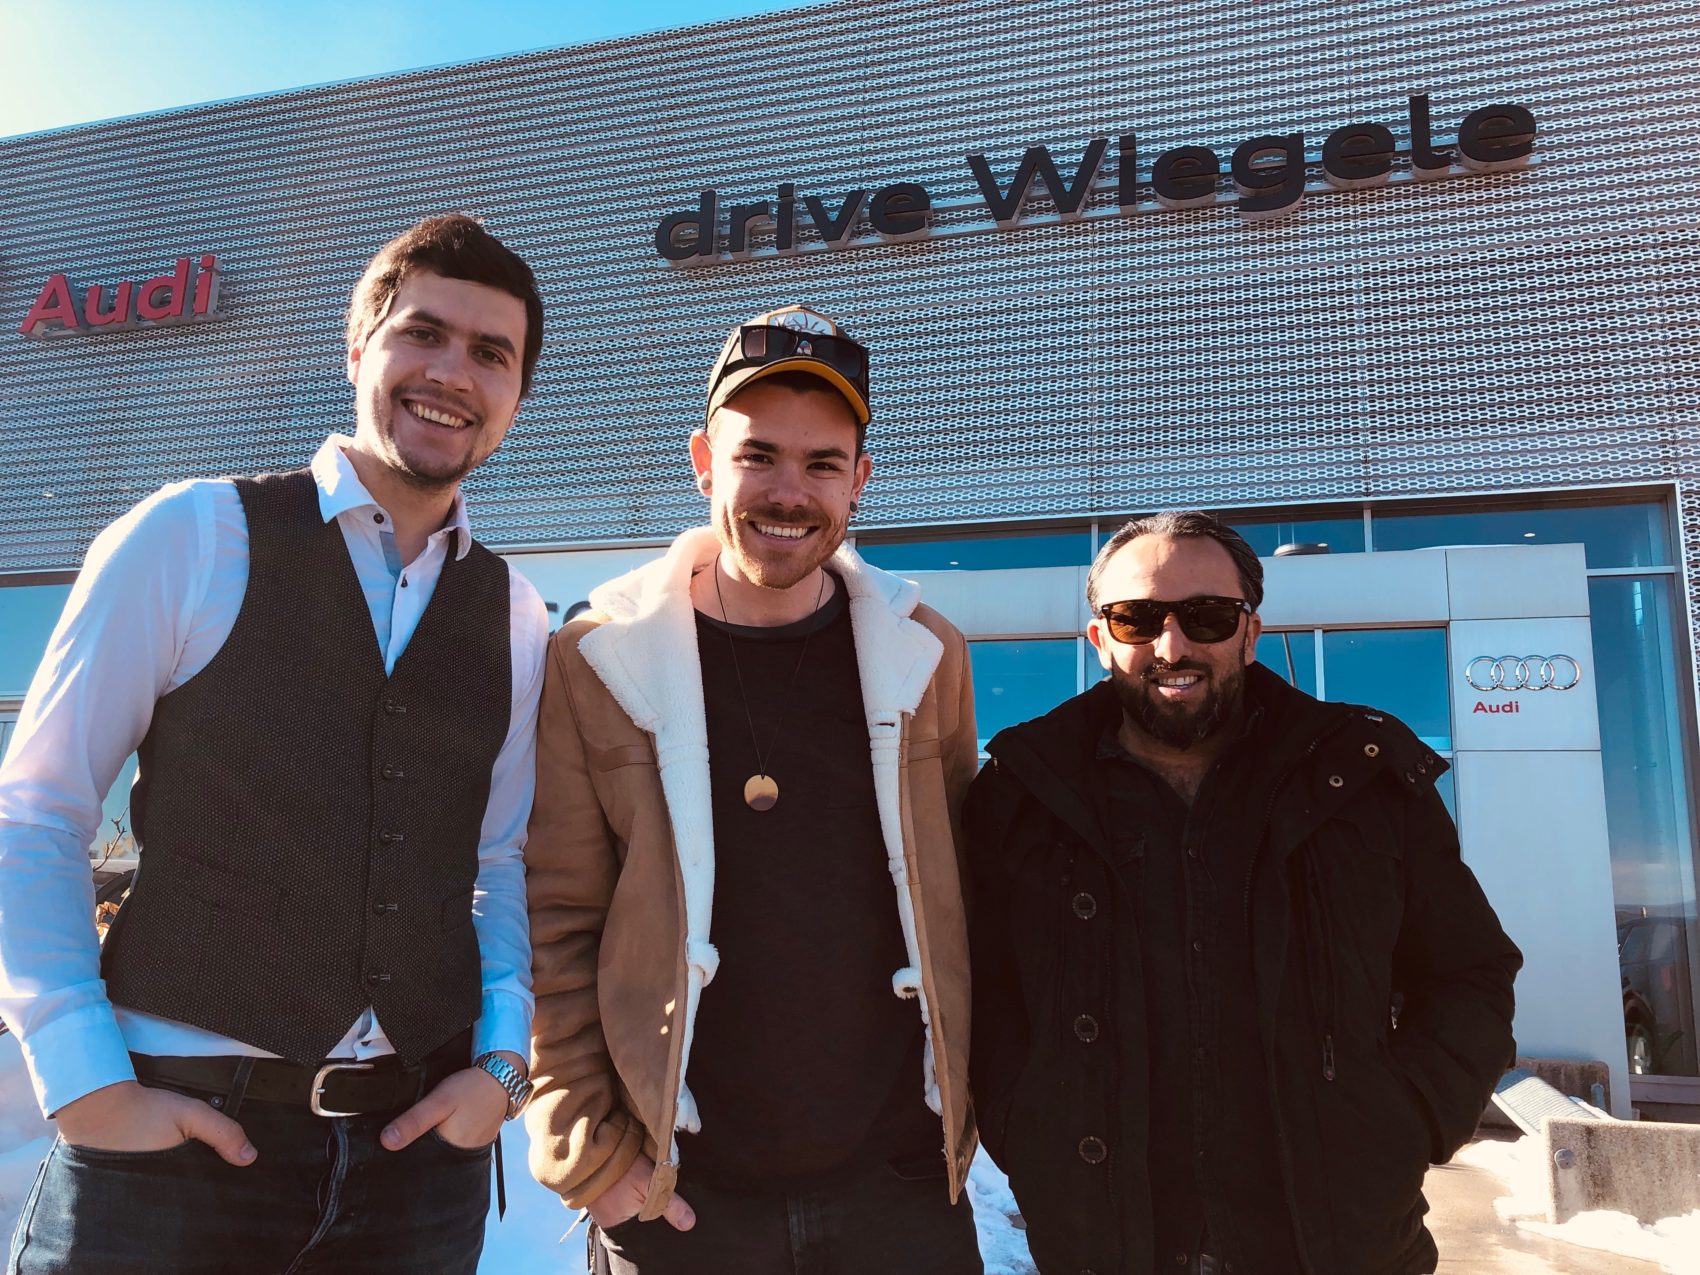 Thomas Wiegele von DRIVE WIEGELE (links) mit Matakustix Musiker Matthias Ortner und Party-Organisator Mustafa “Musti” Keceli